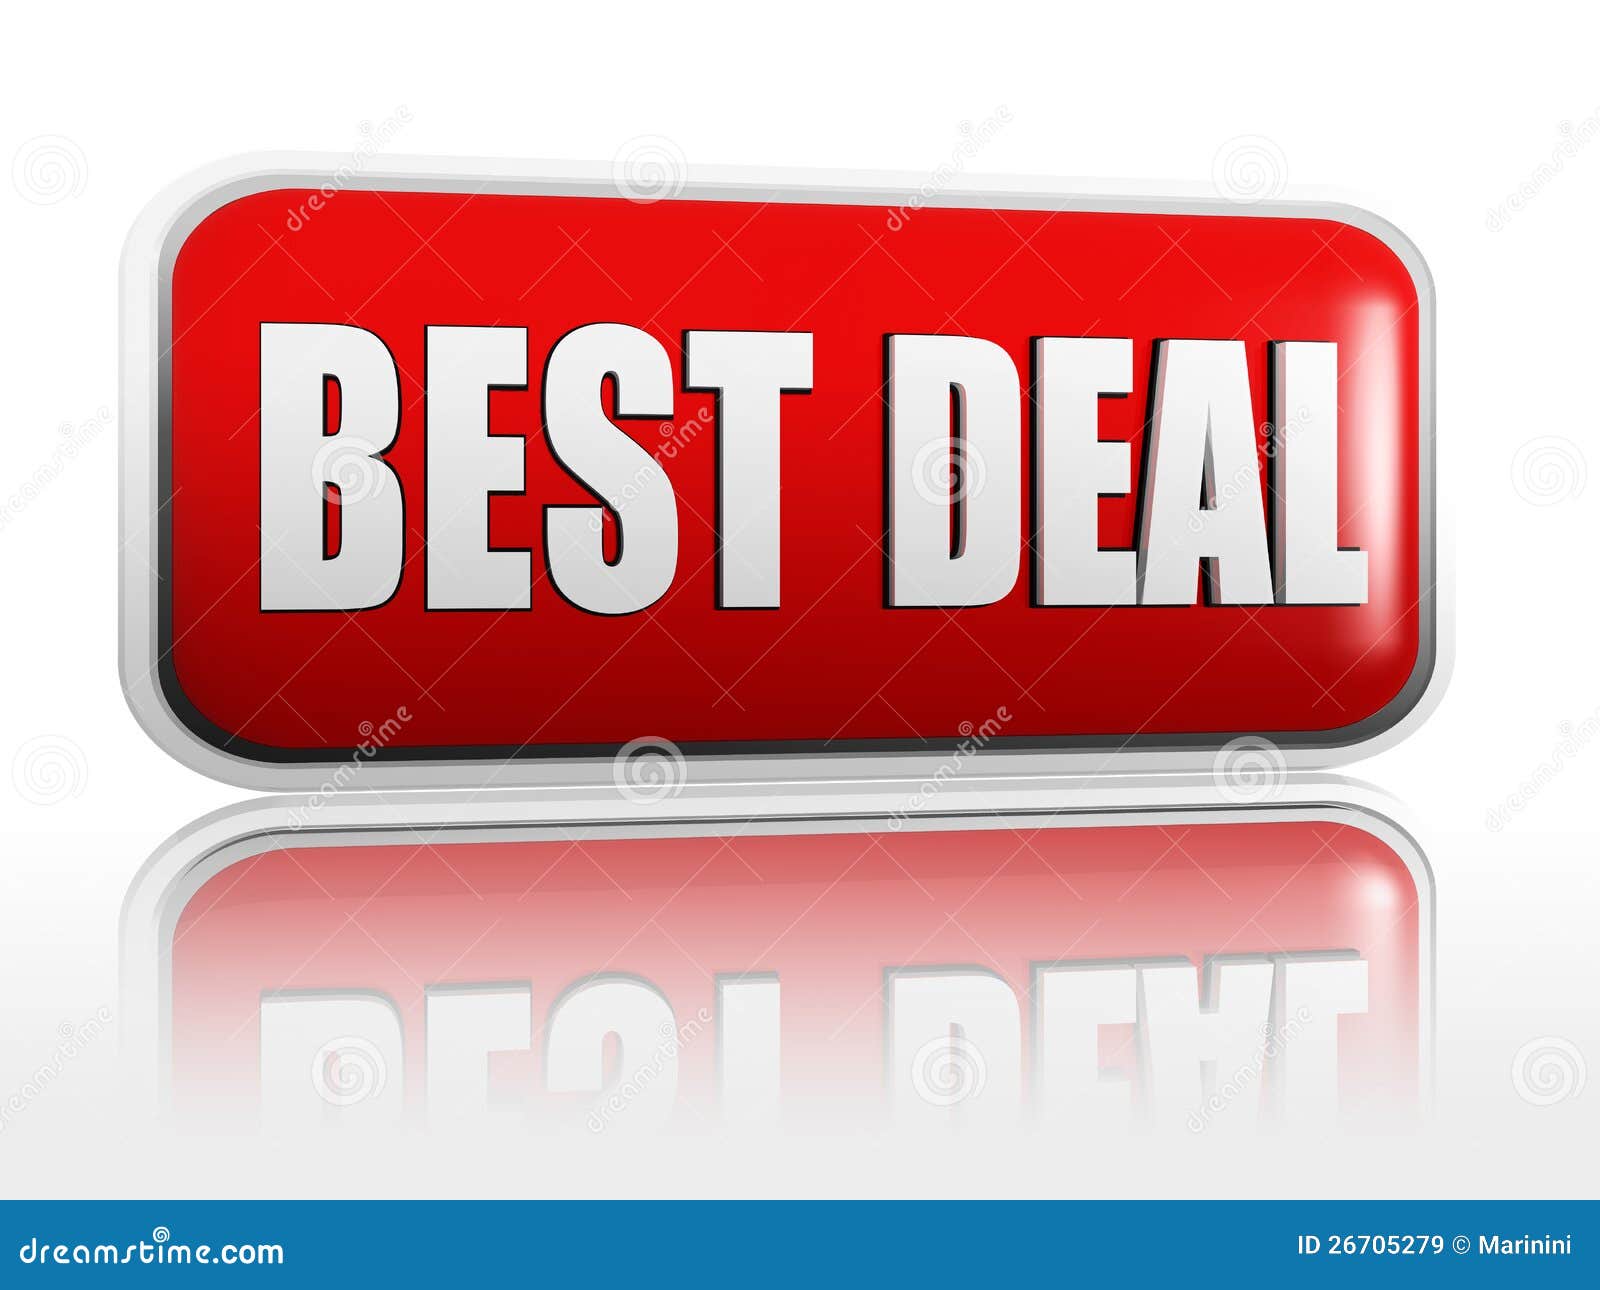 Best deal banner stock illustration. Illustration of finance - 26705279